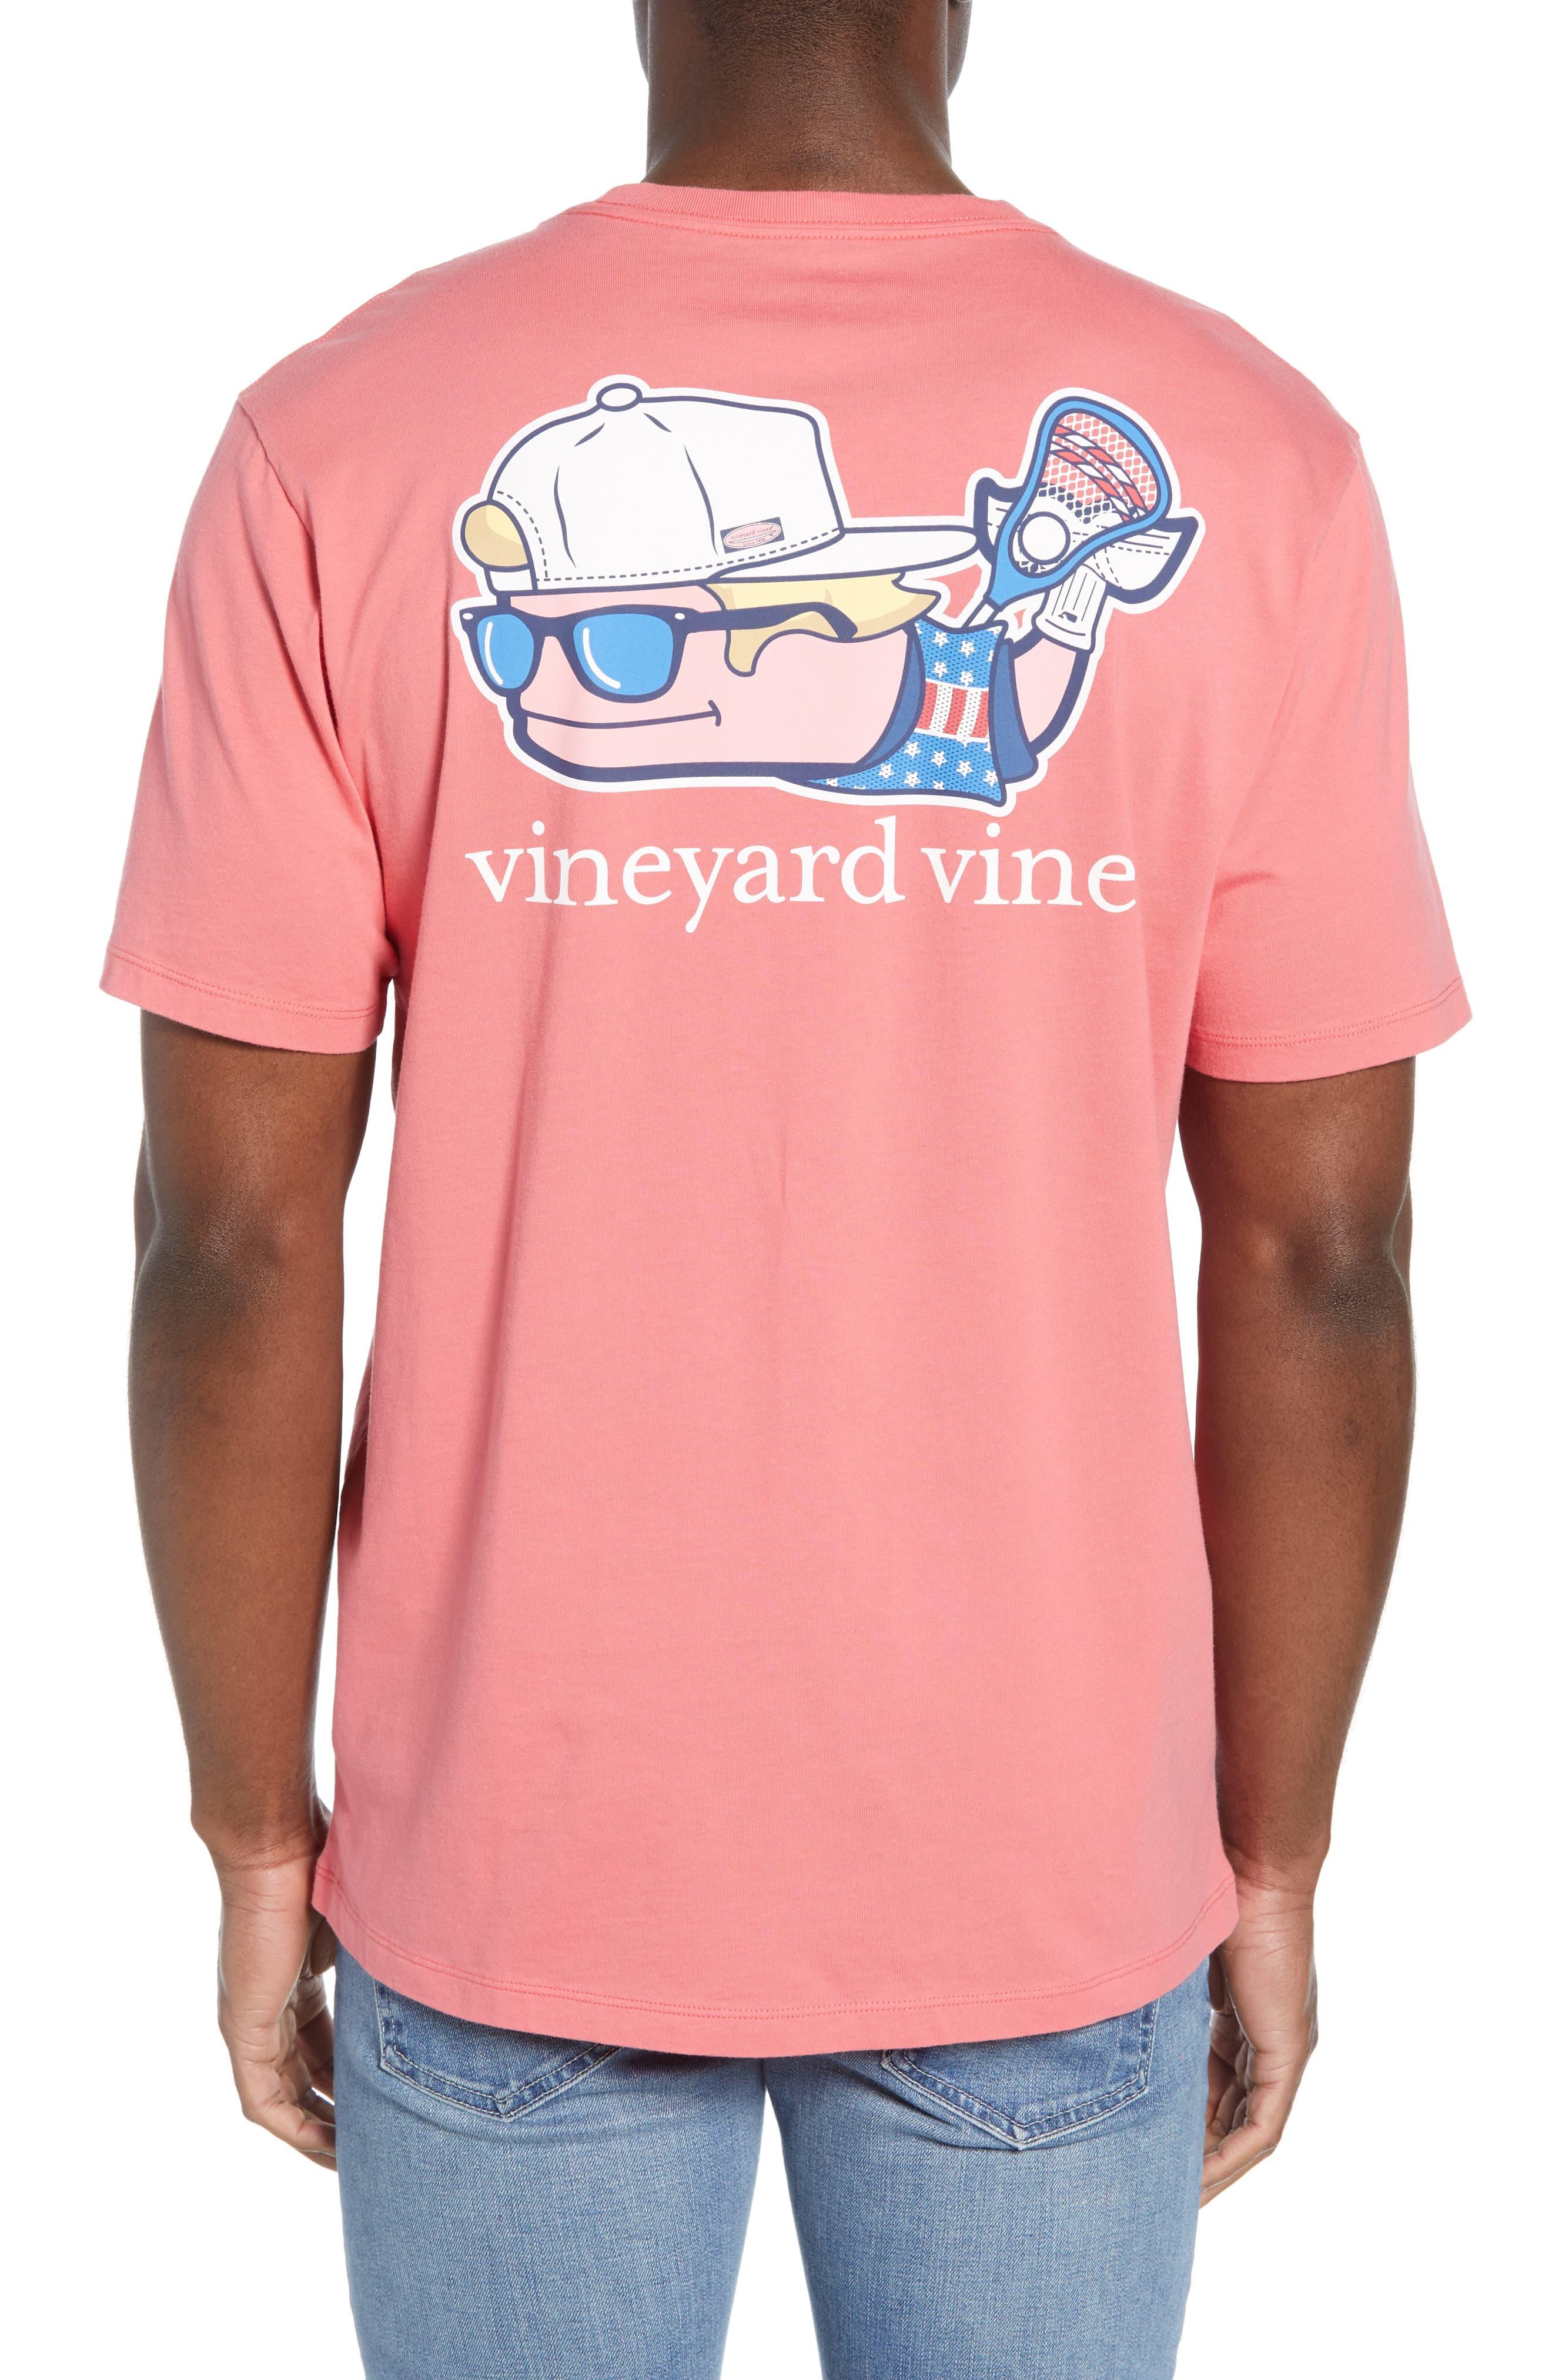 Vineyard Vines Cotton Lacrosse Whale Pocket T-shirt in Pink for Men - Lyst